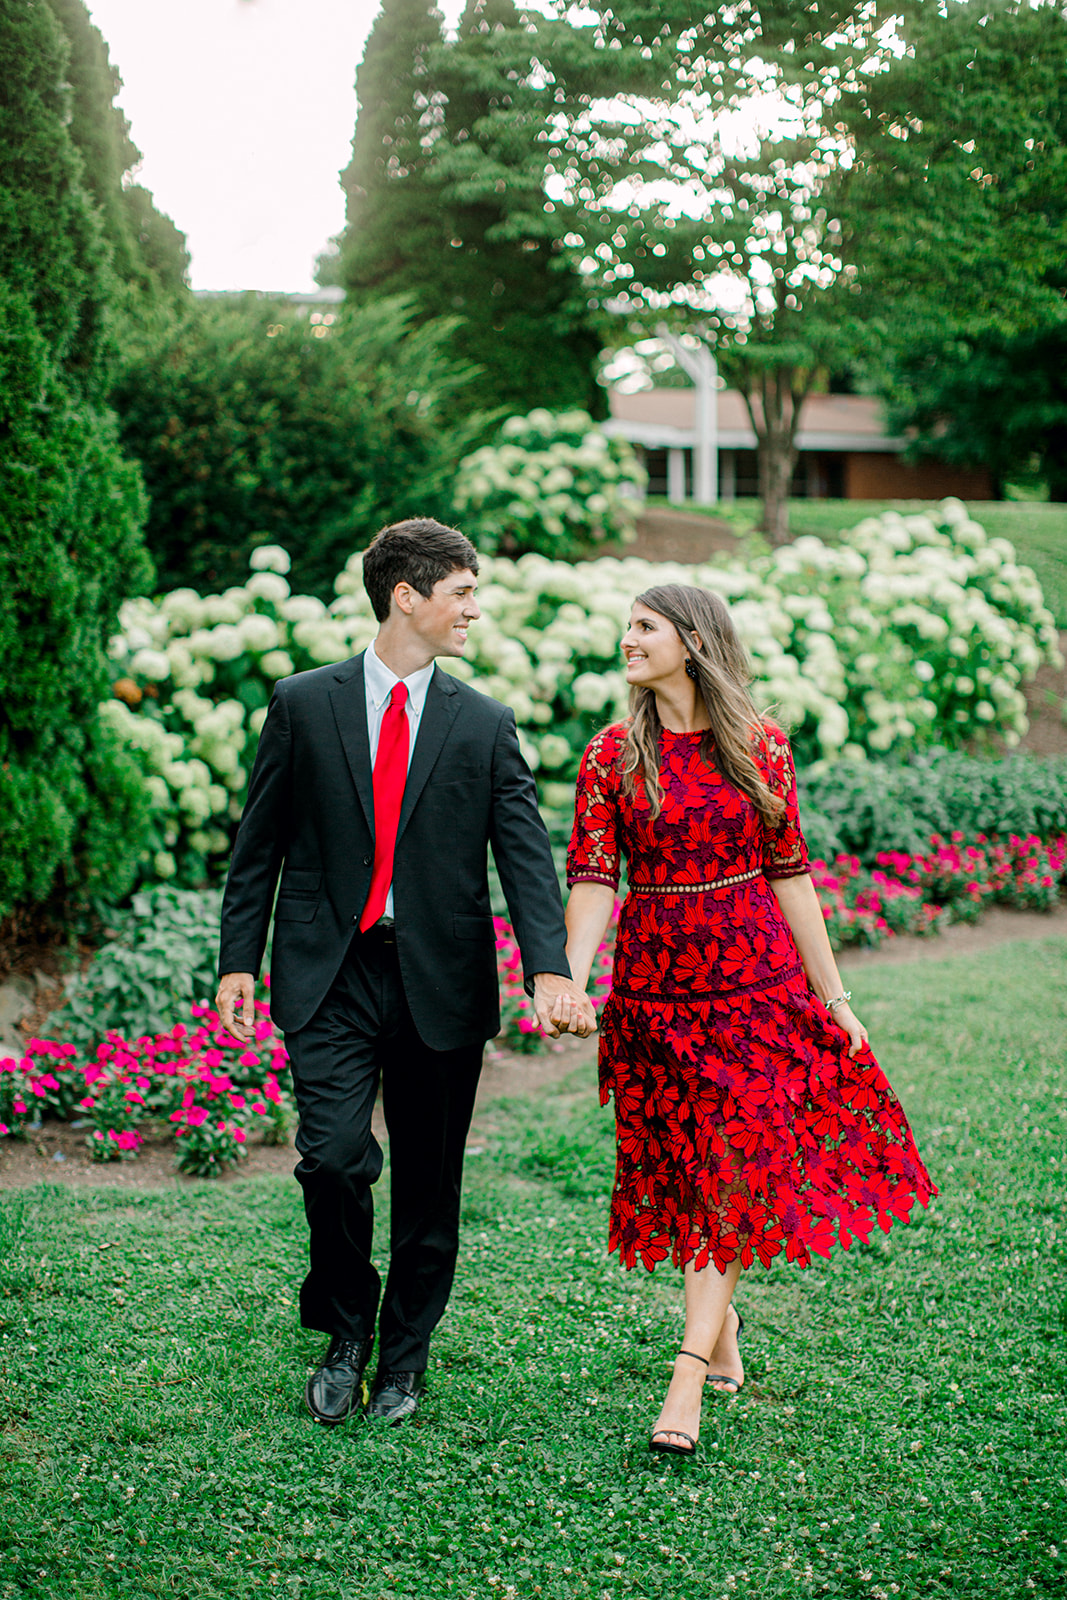 Centennial Park Nashville Engagement Session by Ashton Brooke Photography featured on Nashville Bride Guide